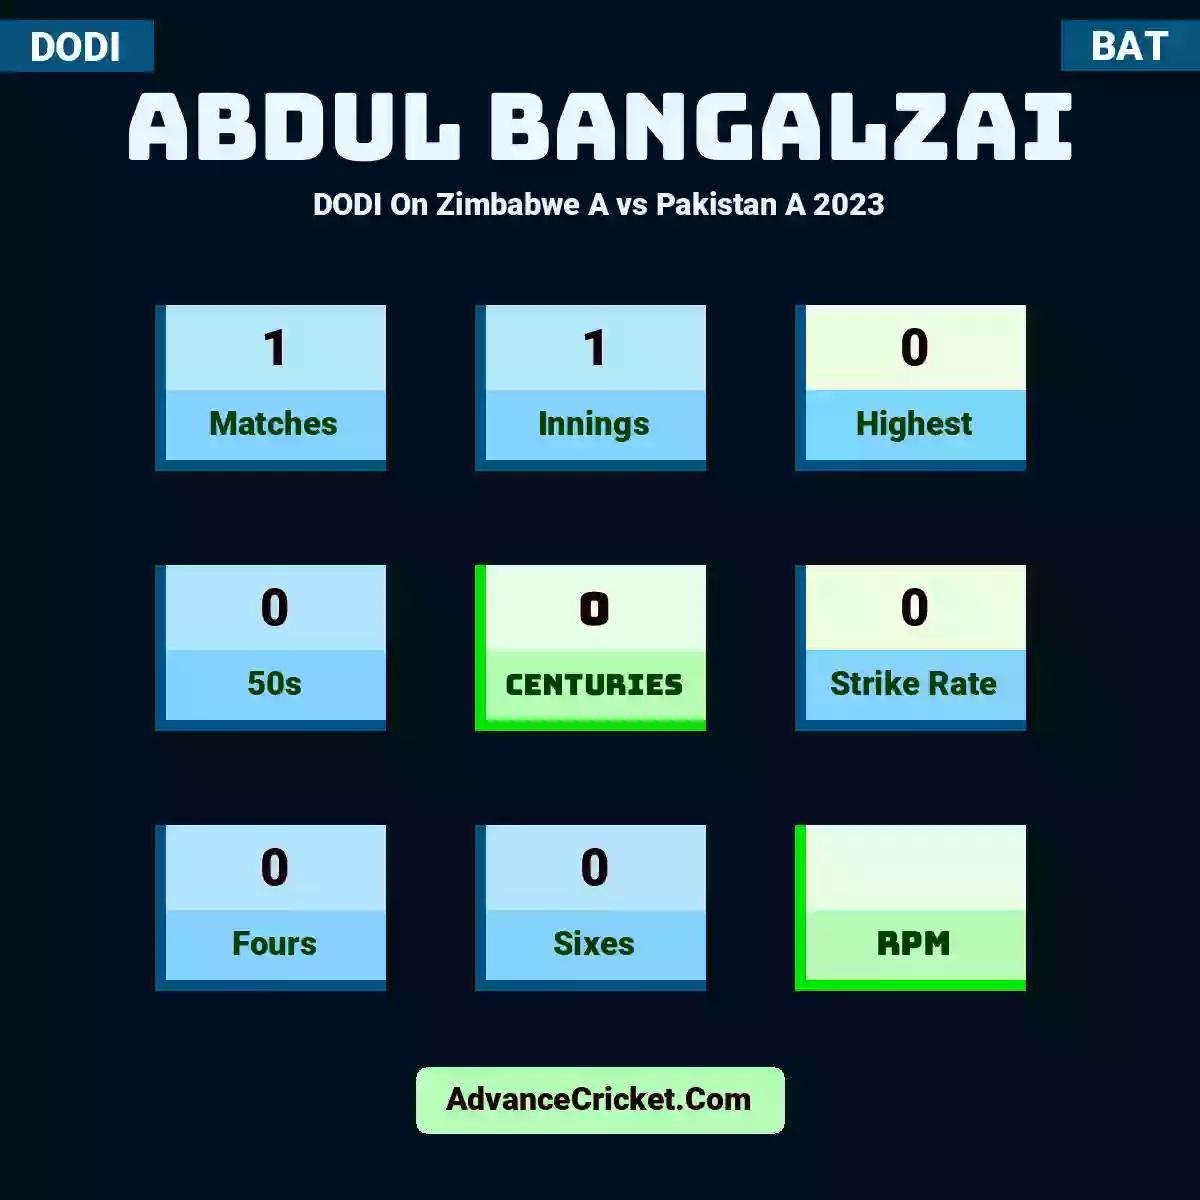 Abdul Bangalzai DODI  On Zimbabwe A vs Pakistan A 2023, Abdul Bangalzai played 1 matches, scored 0 runs as highest, 0 half-centuries, and 0 centuries, with a strike rate of 0. A.Bangalzai hit 0 fours and 0 sixes.